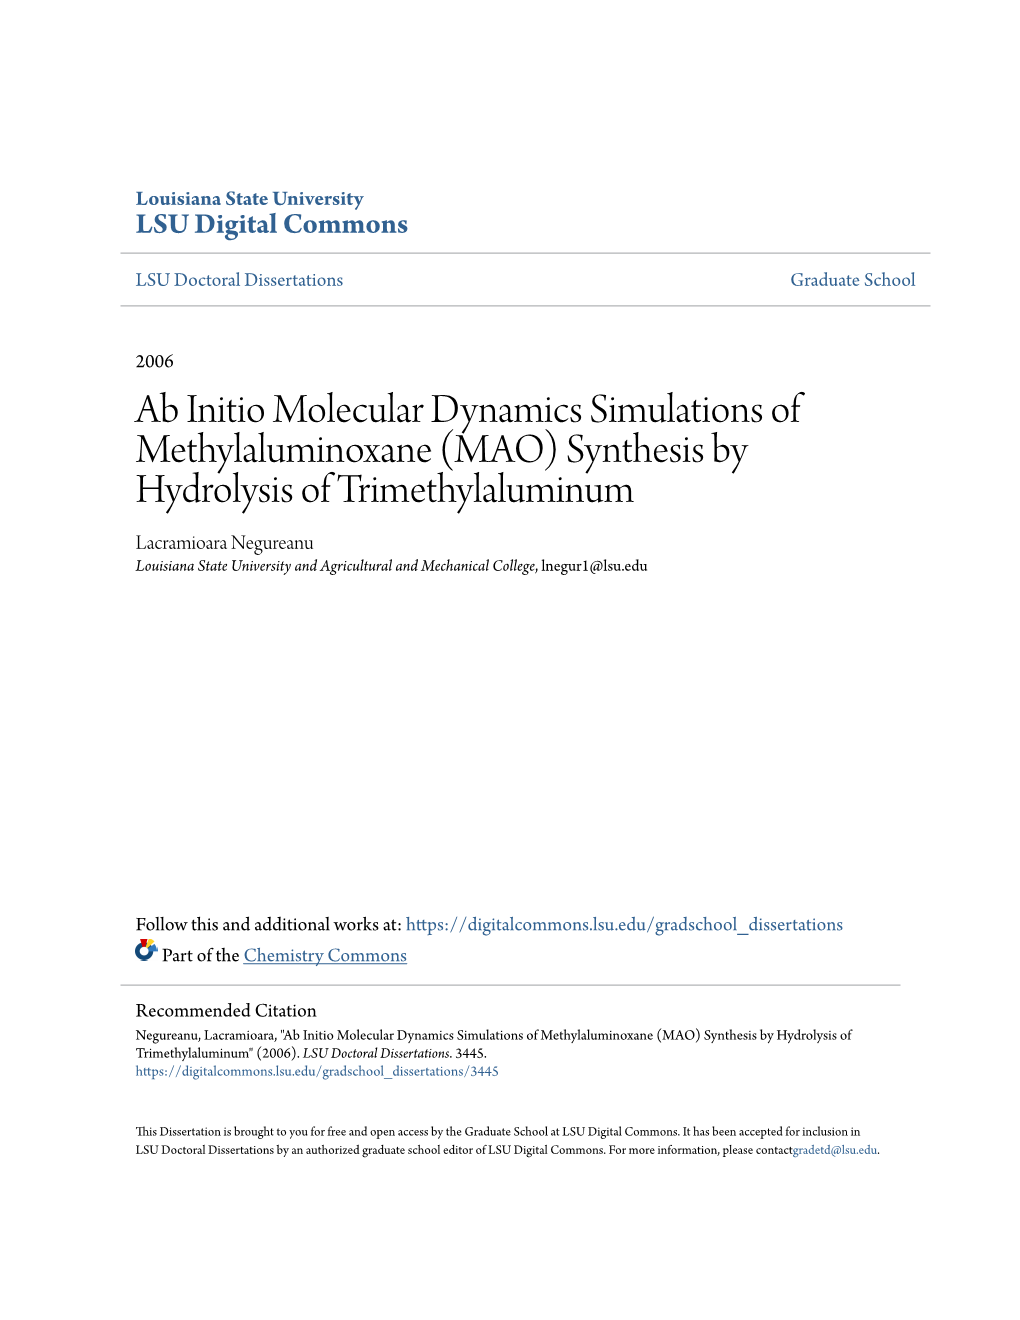 Synthesis by Hydrolysis of Trimethylaluminum Lacramioara Negureanu Louisiana State University and Agricultural and Mechanical College, Lnegur1@Lsu.Edu